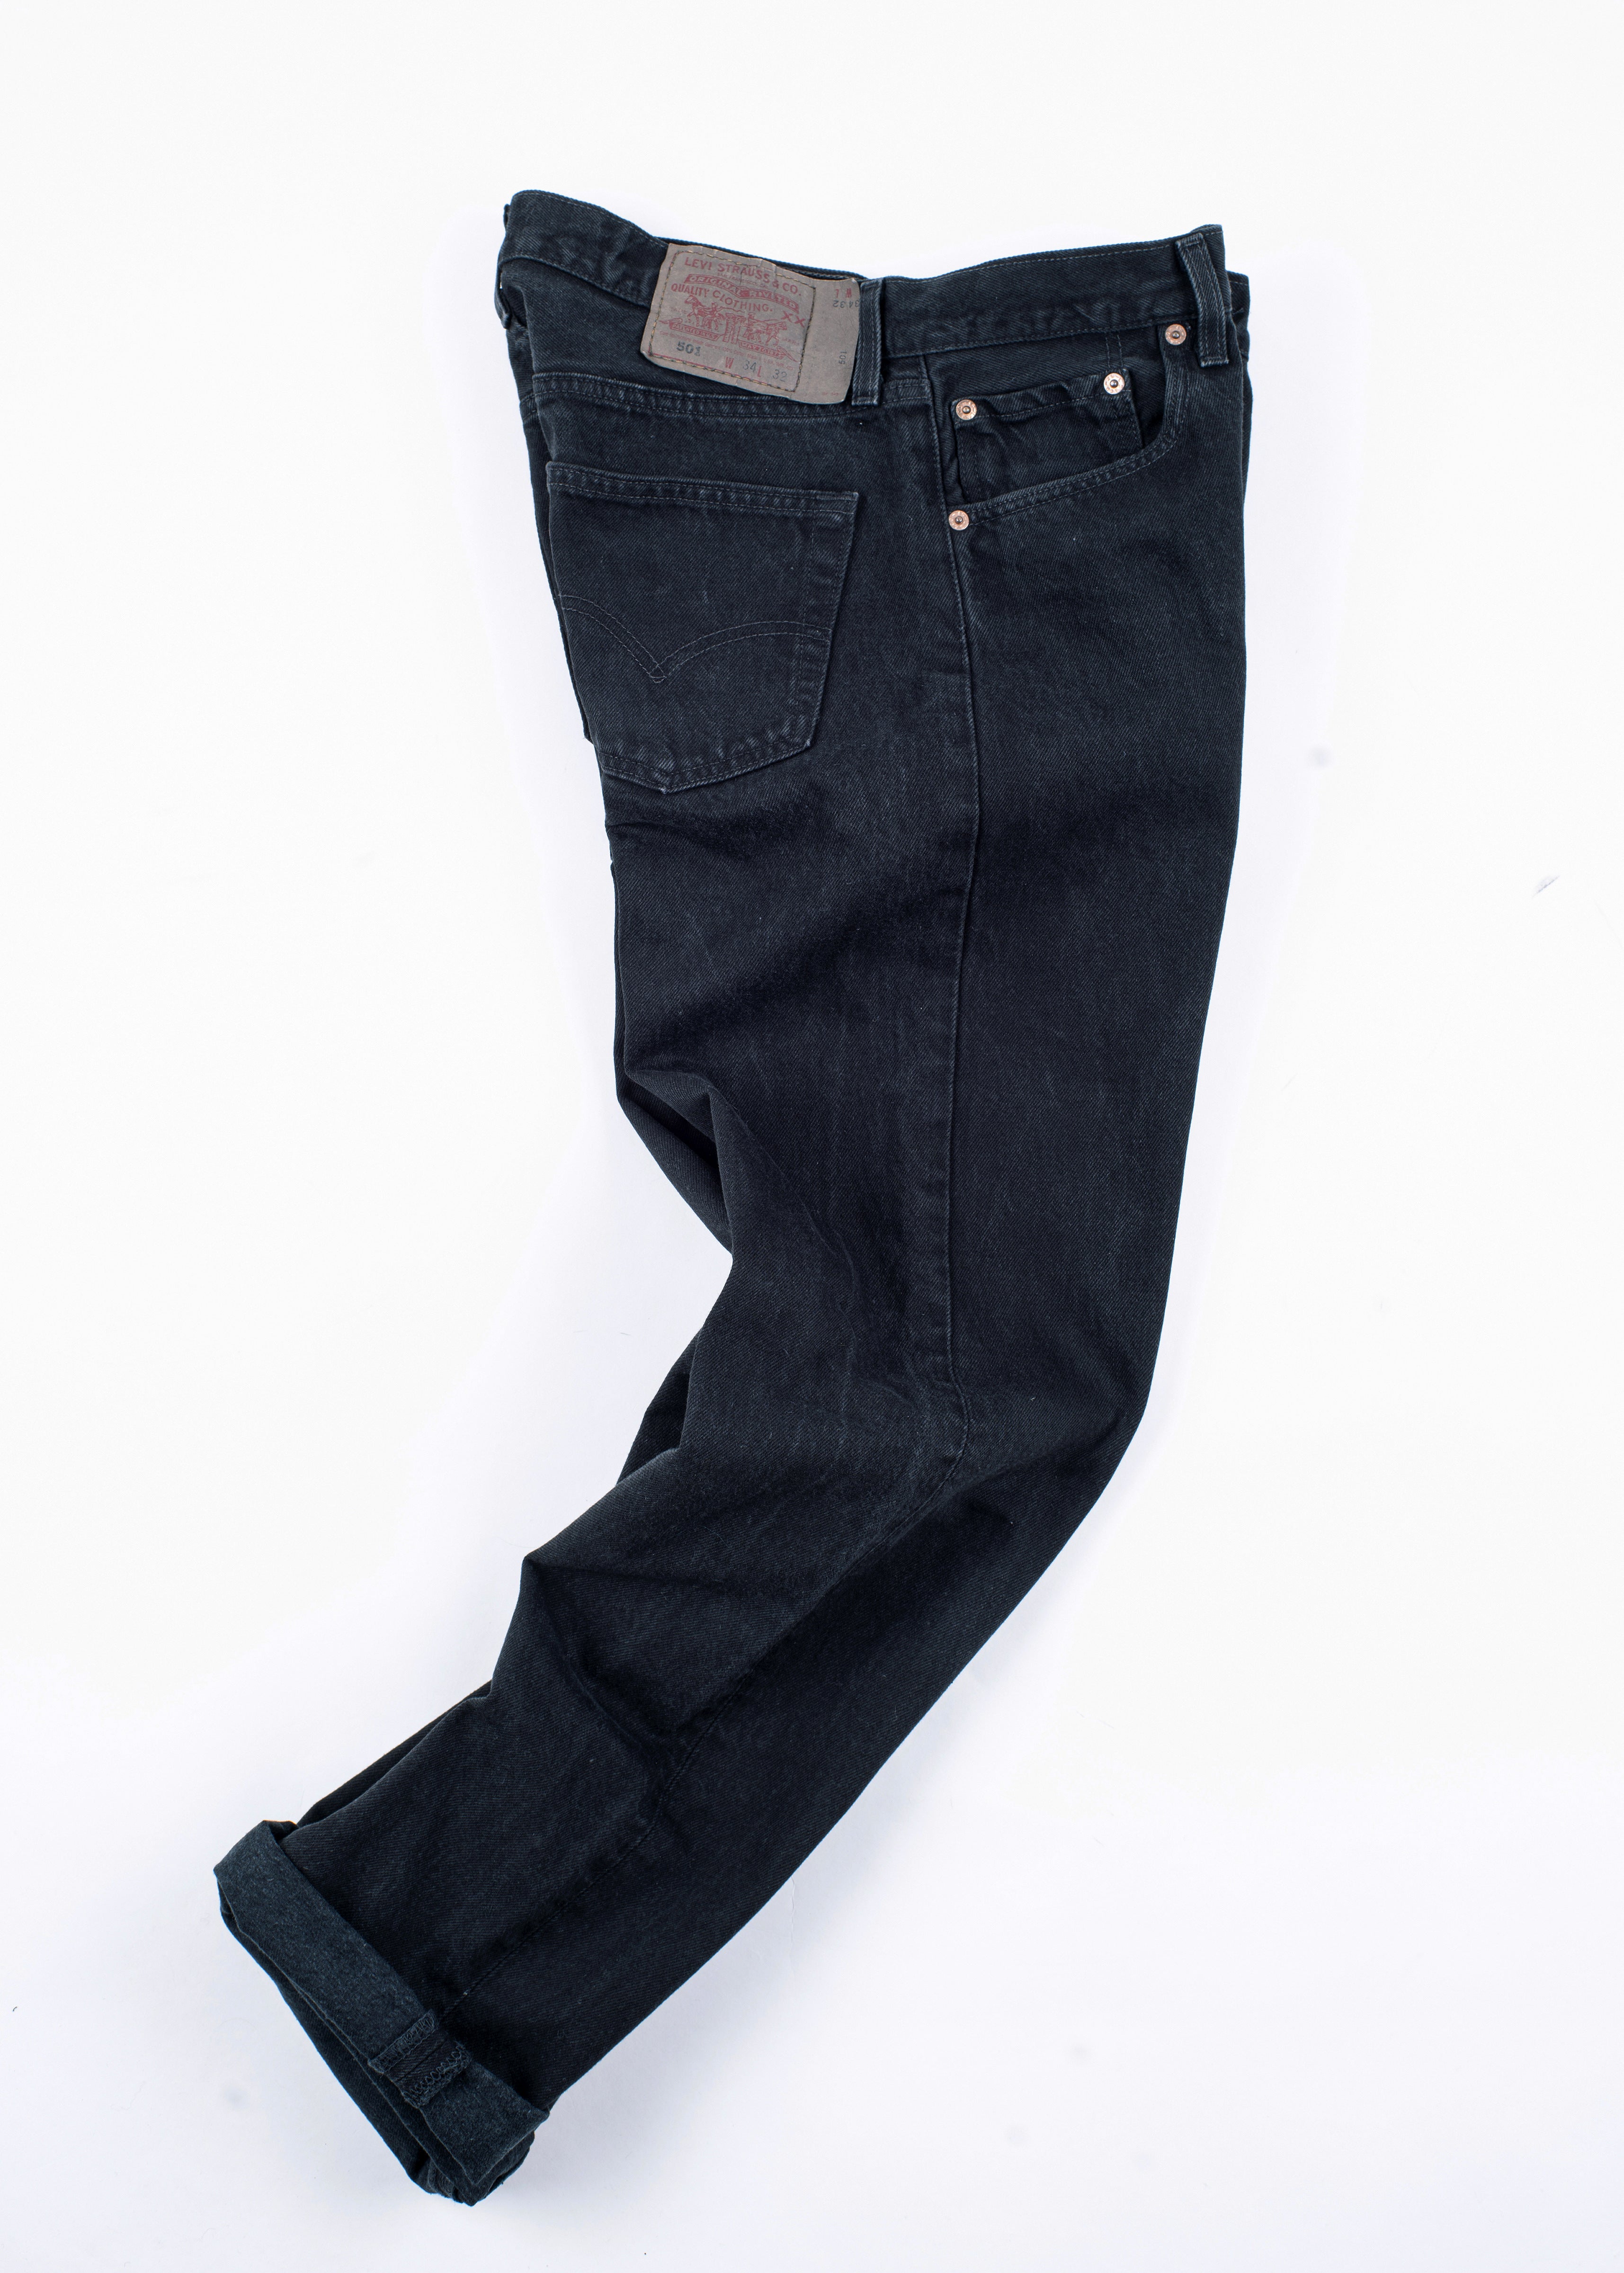 Levi's 501 Men's Vintage Black Jeans Made in USA, W34/L32 